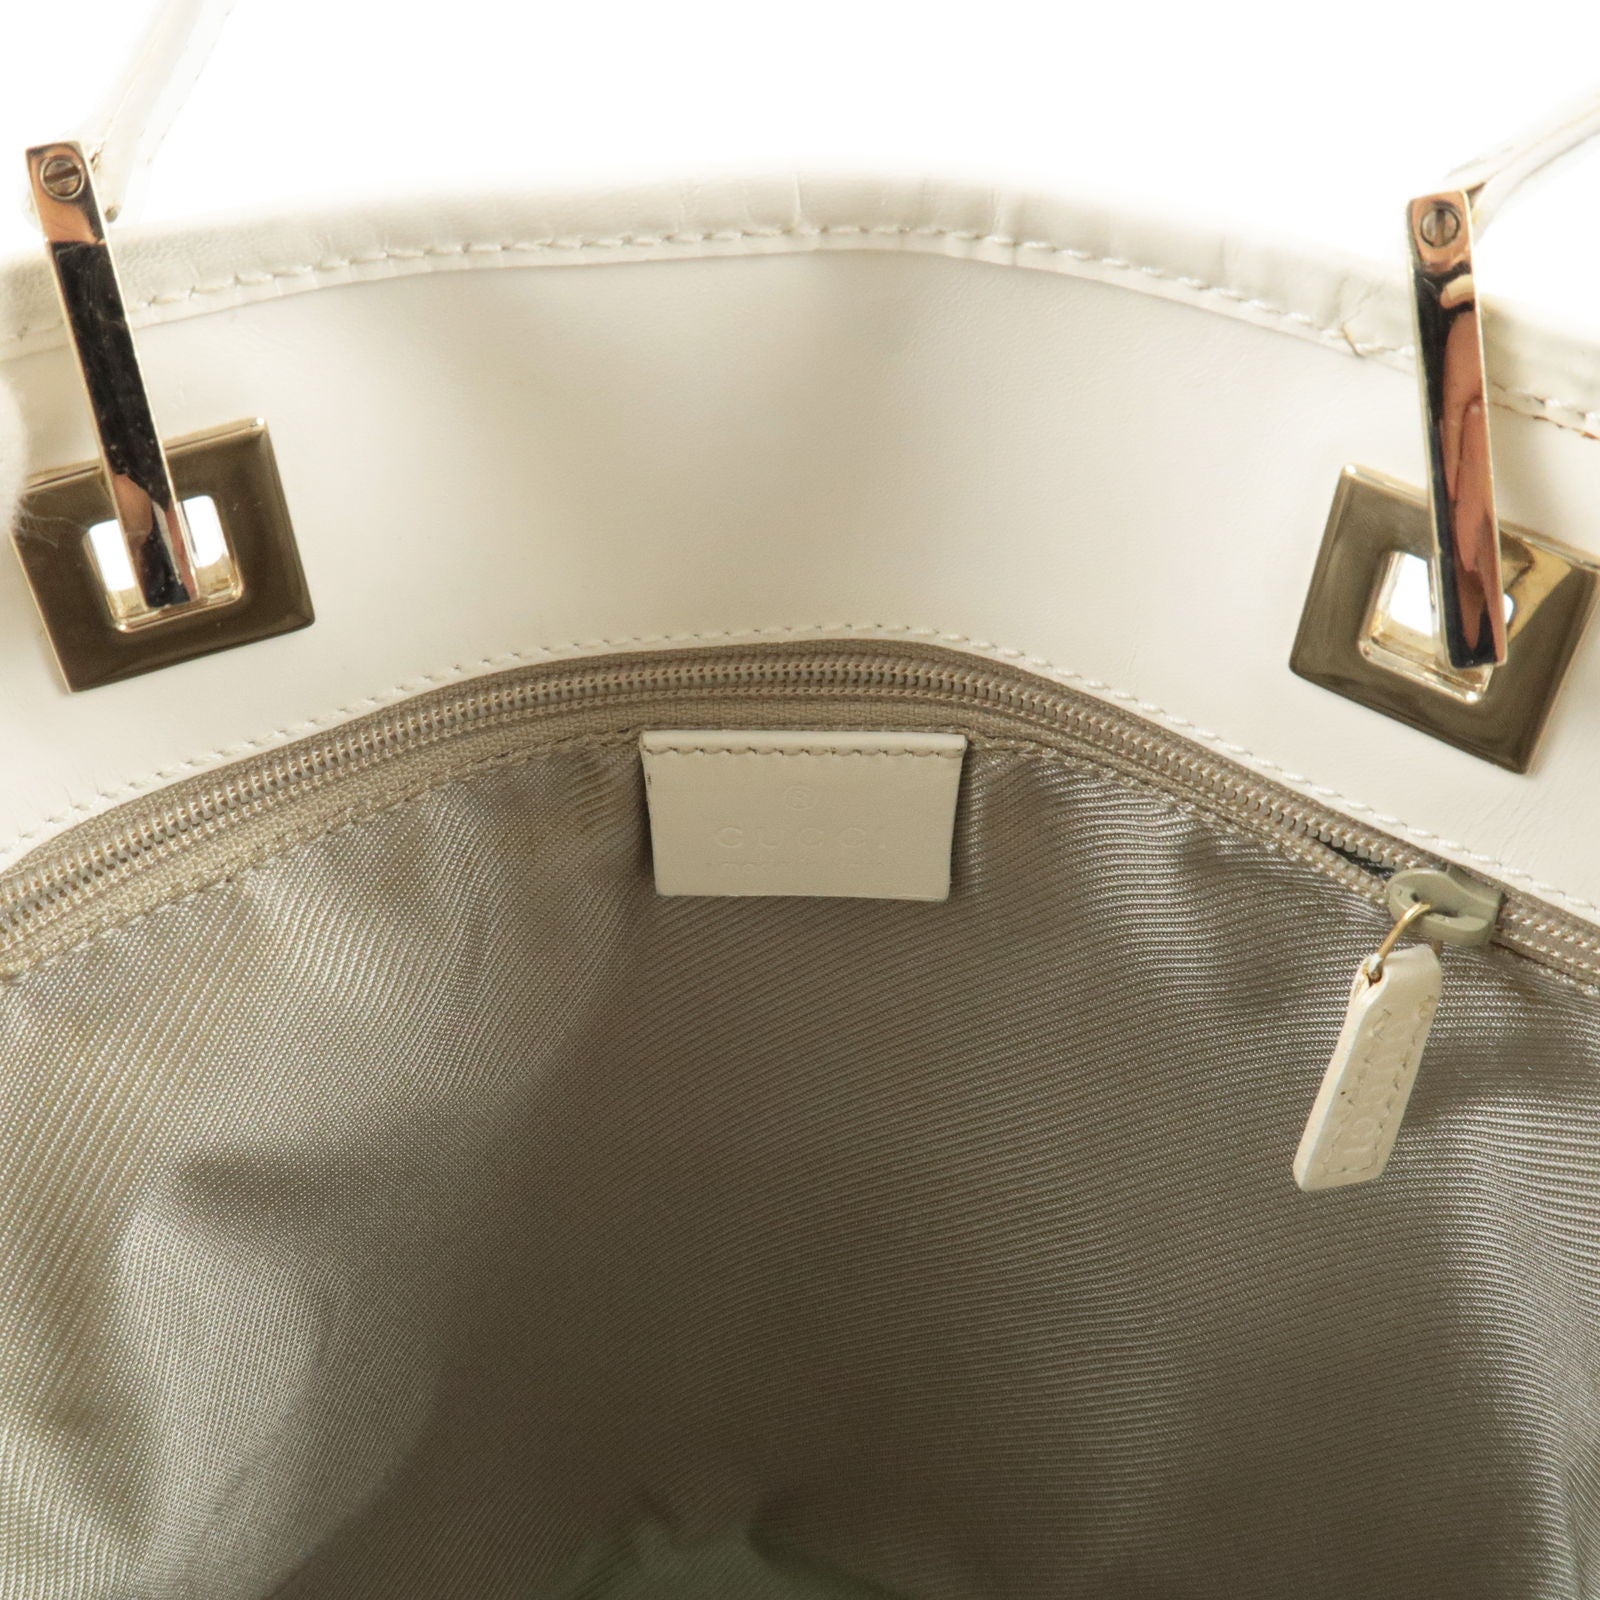 Designer Leather Blue White Large Tote Handbag